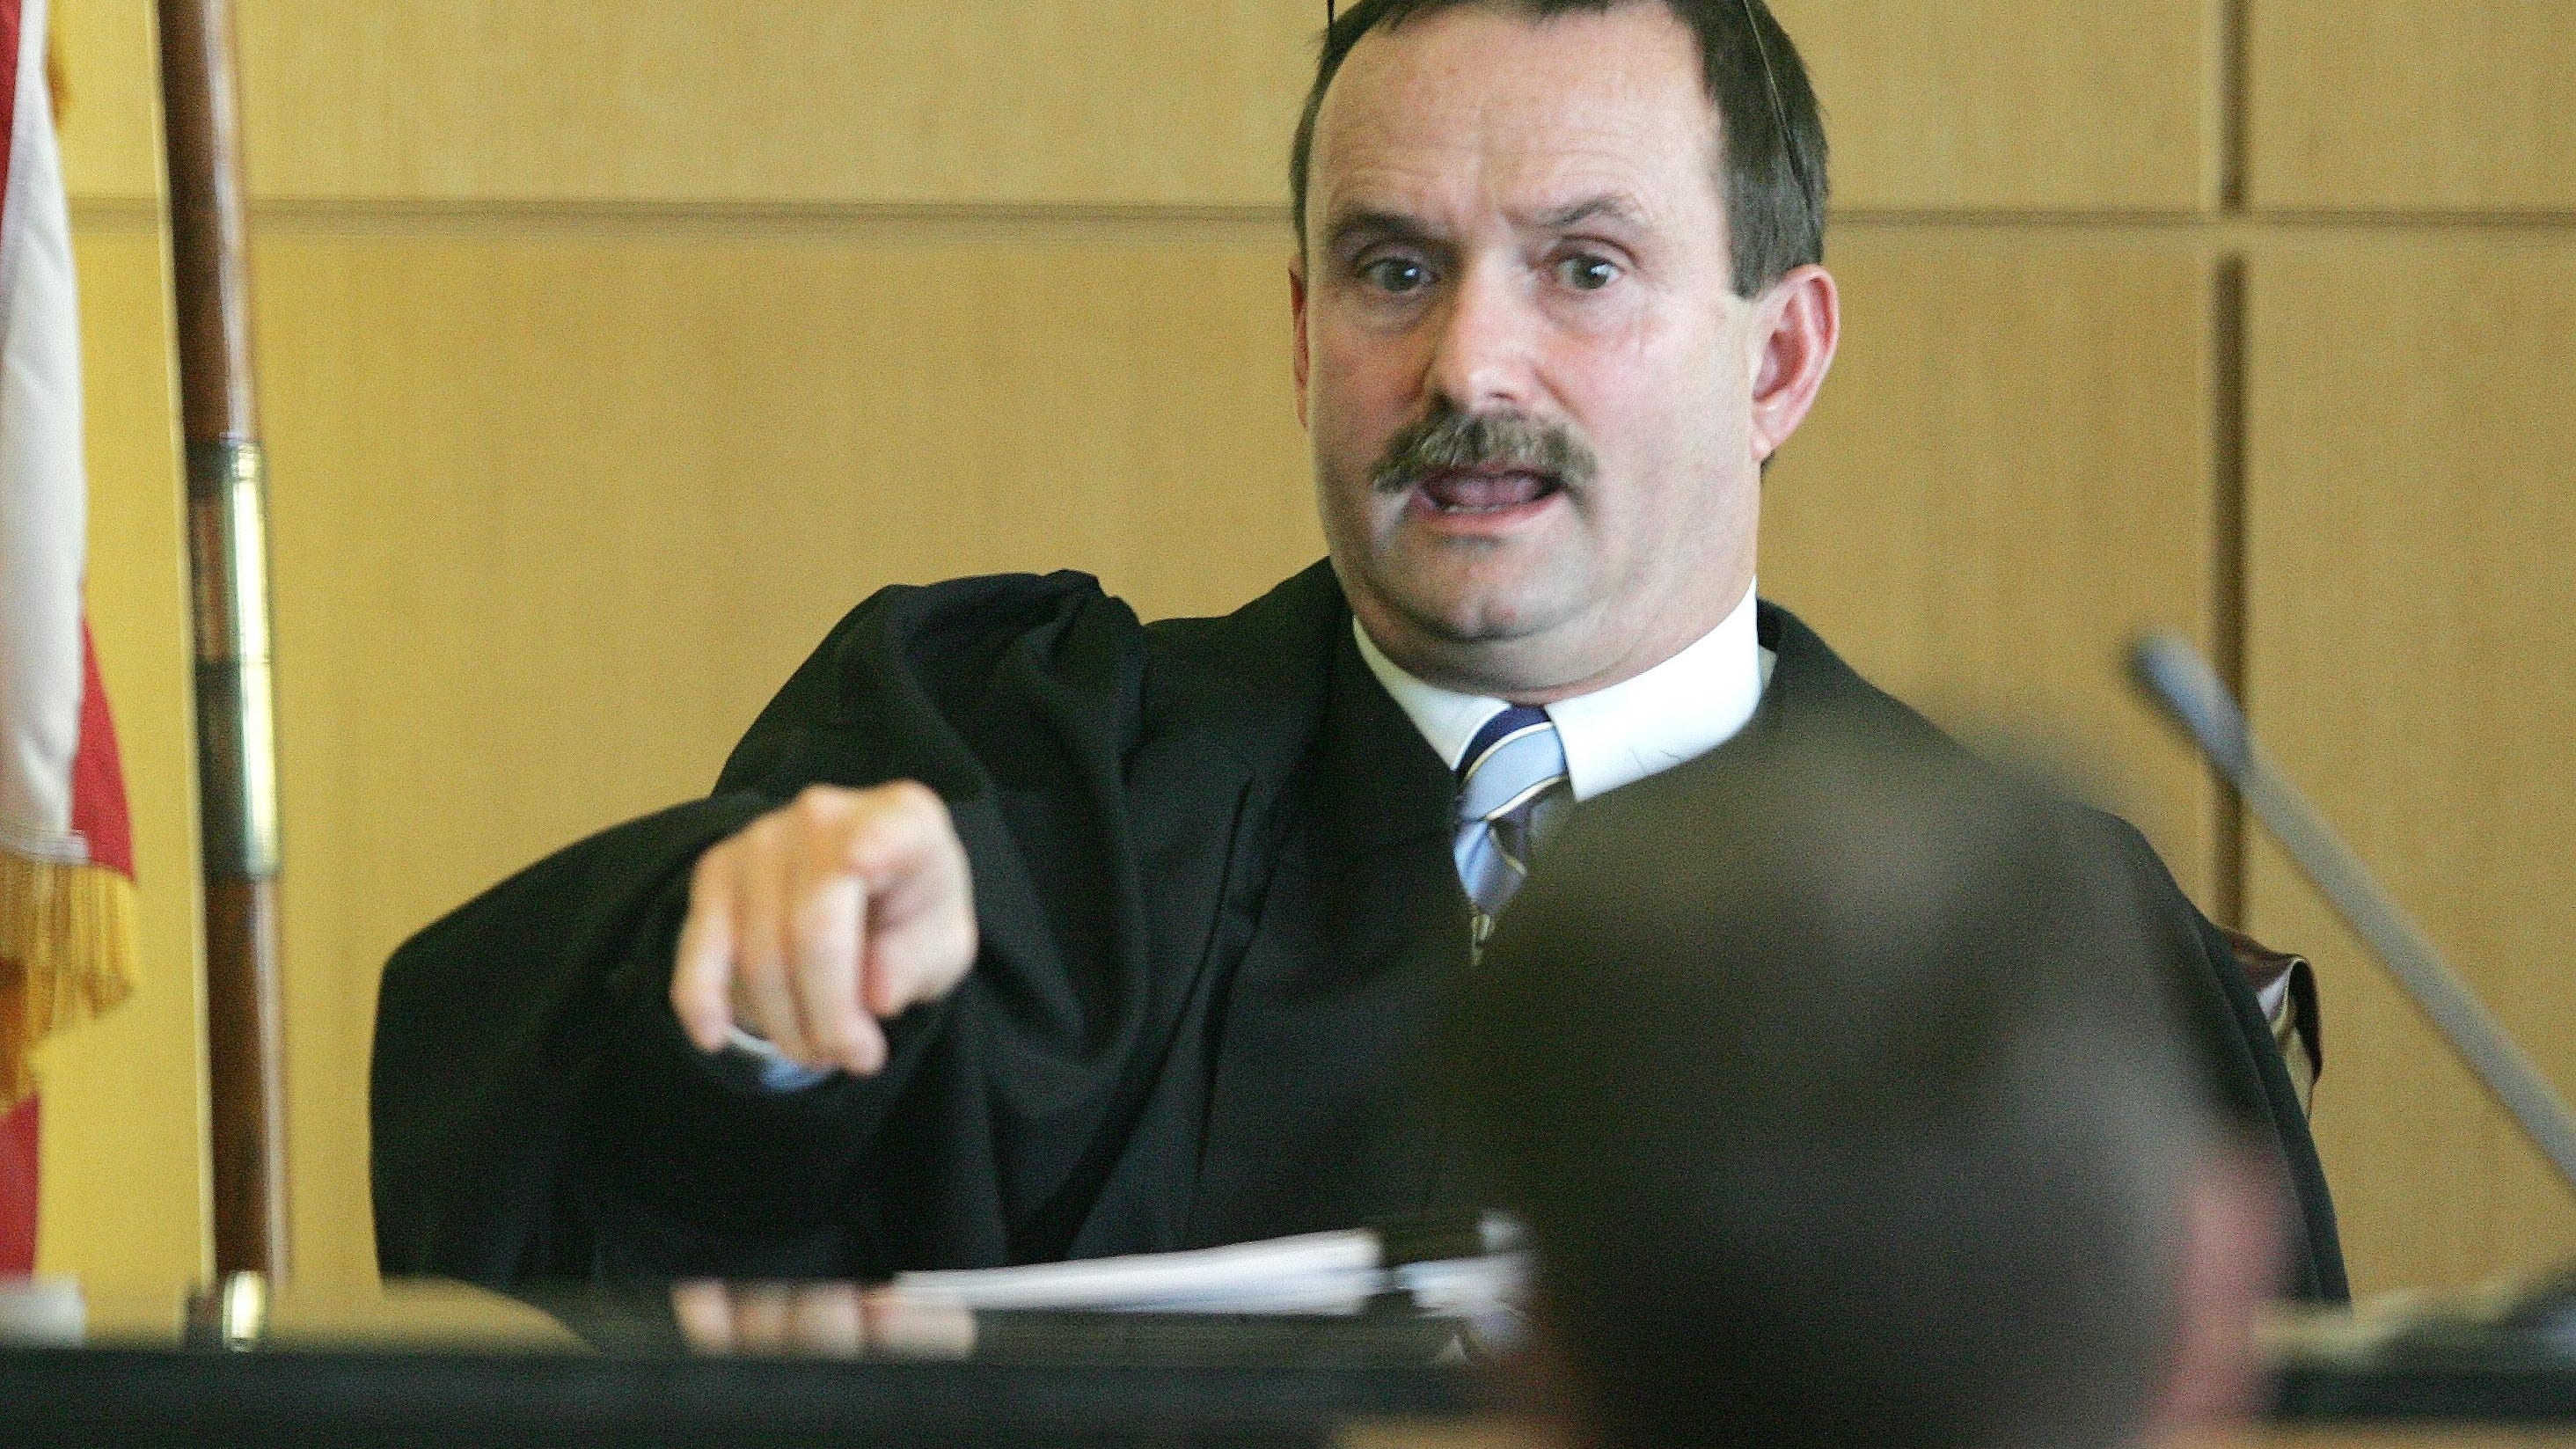 Wayne County Circuit Court Judge Robert Colombo